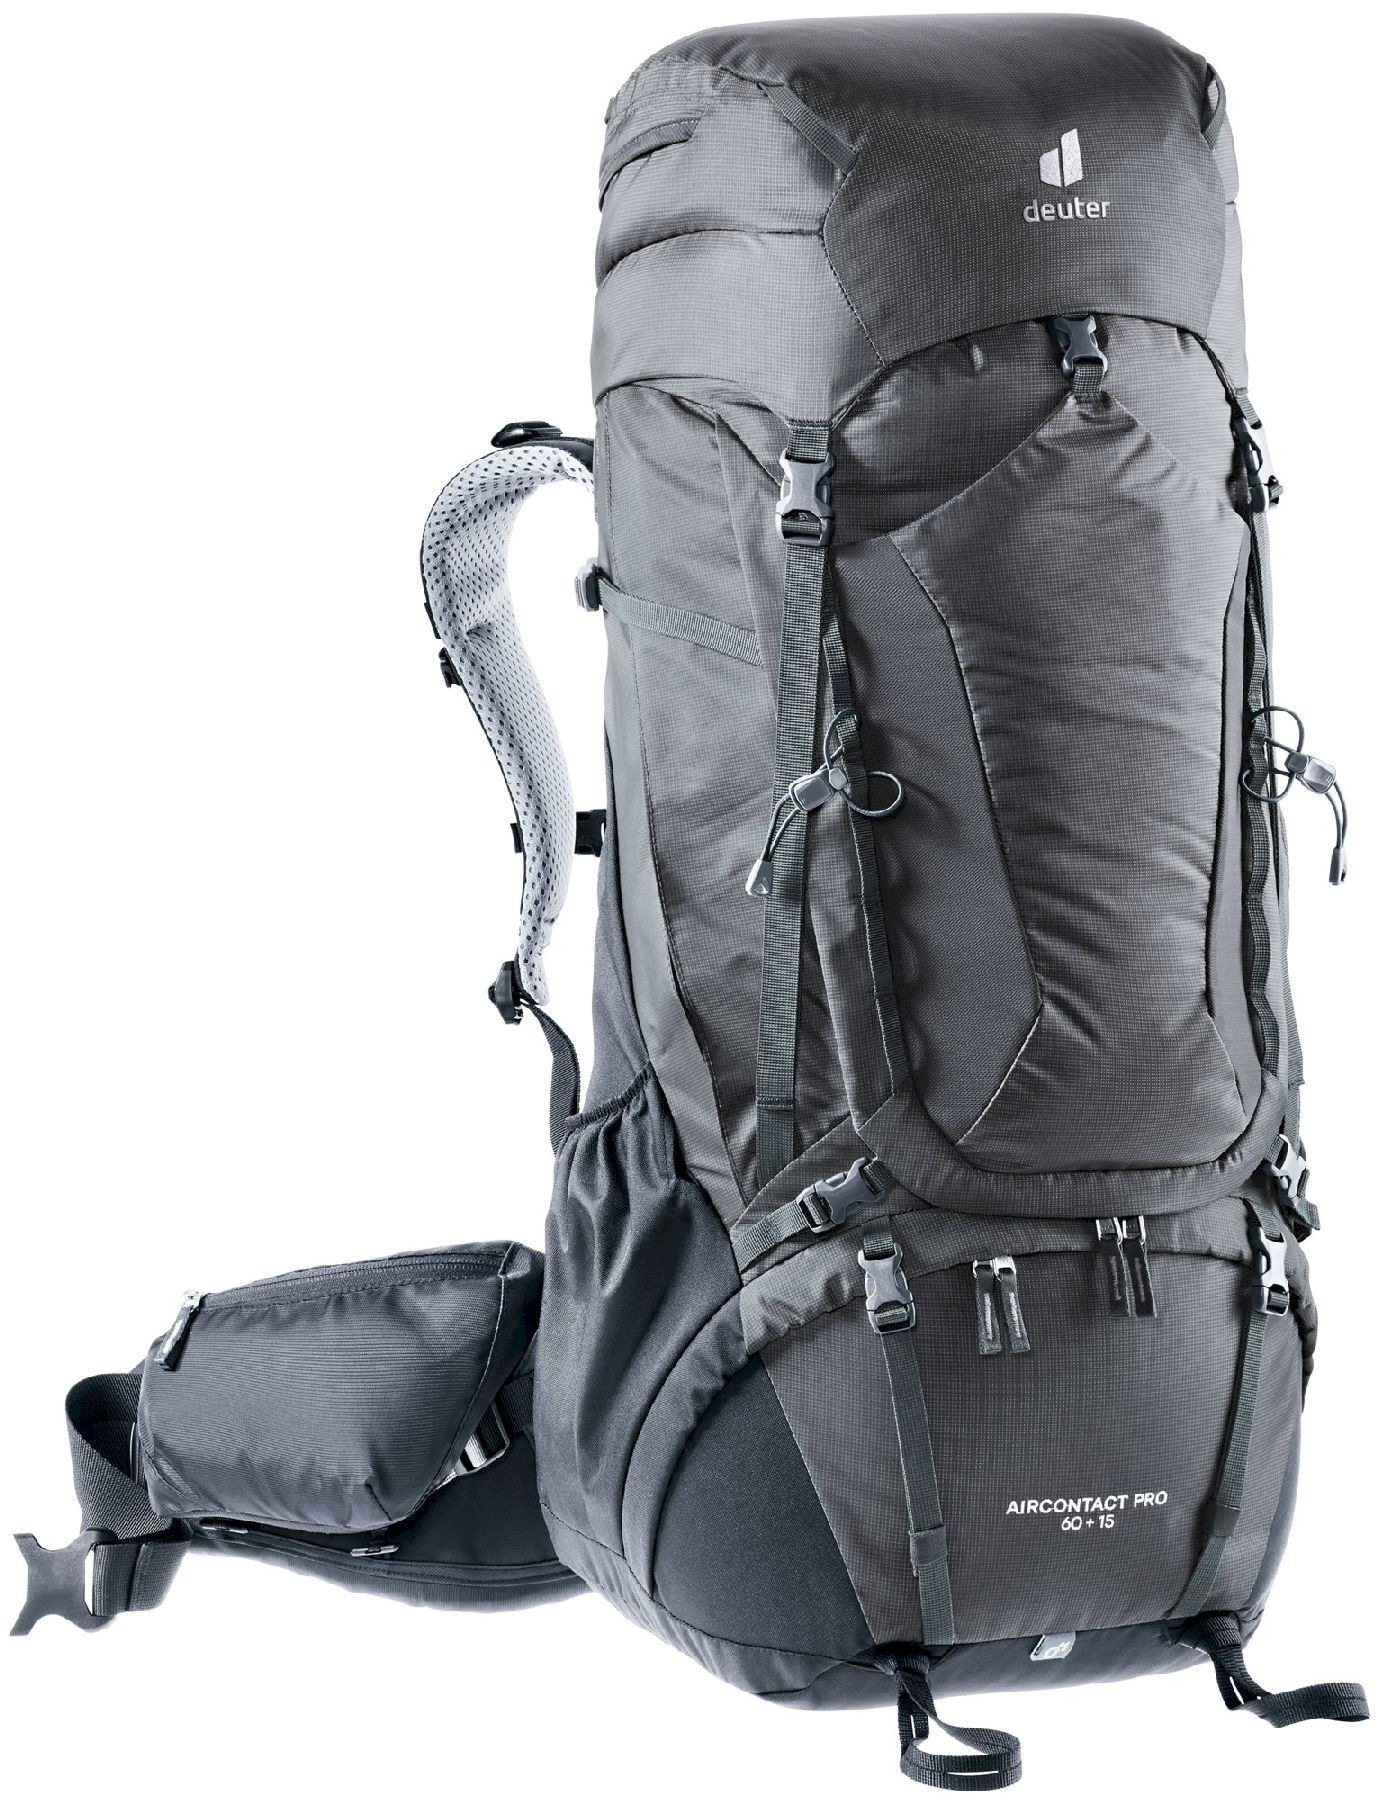 Deuter Aircontact PRO 60 + 15 - Hiking backpack - Men's